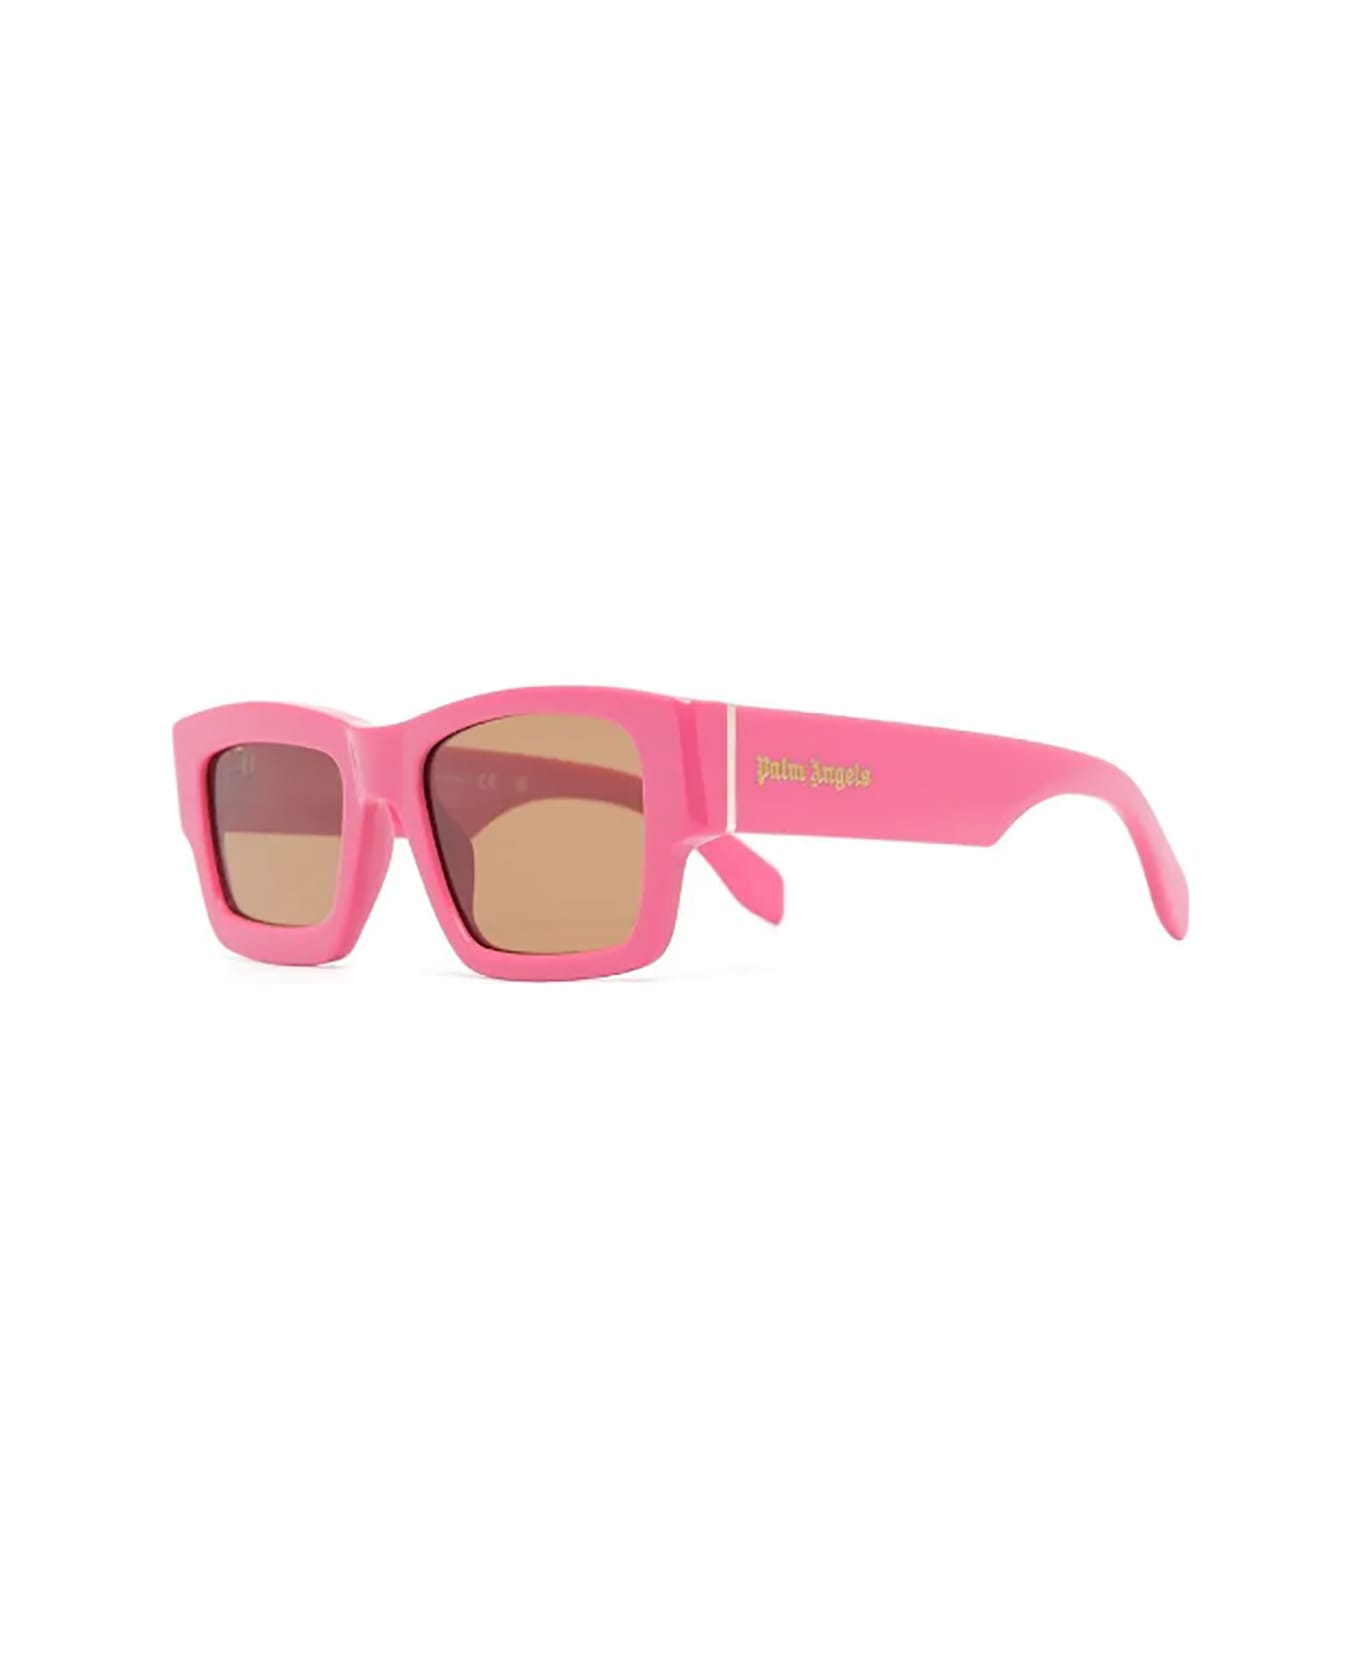 Palm Angels MURRAY SUNGLASSES Sunglasses - Pink